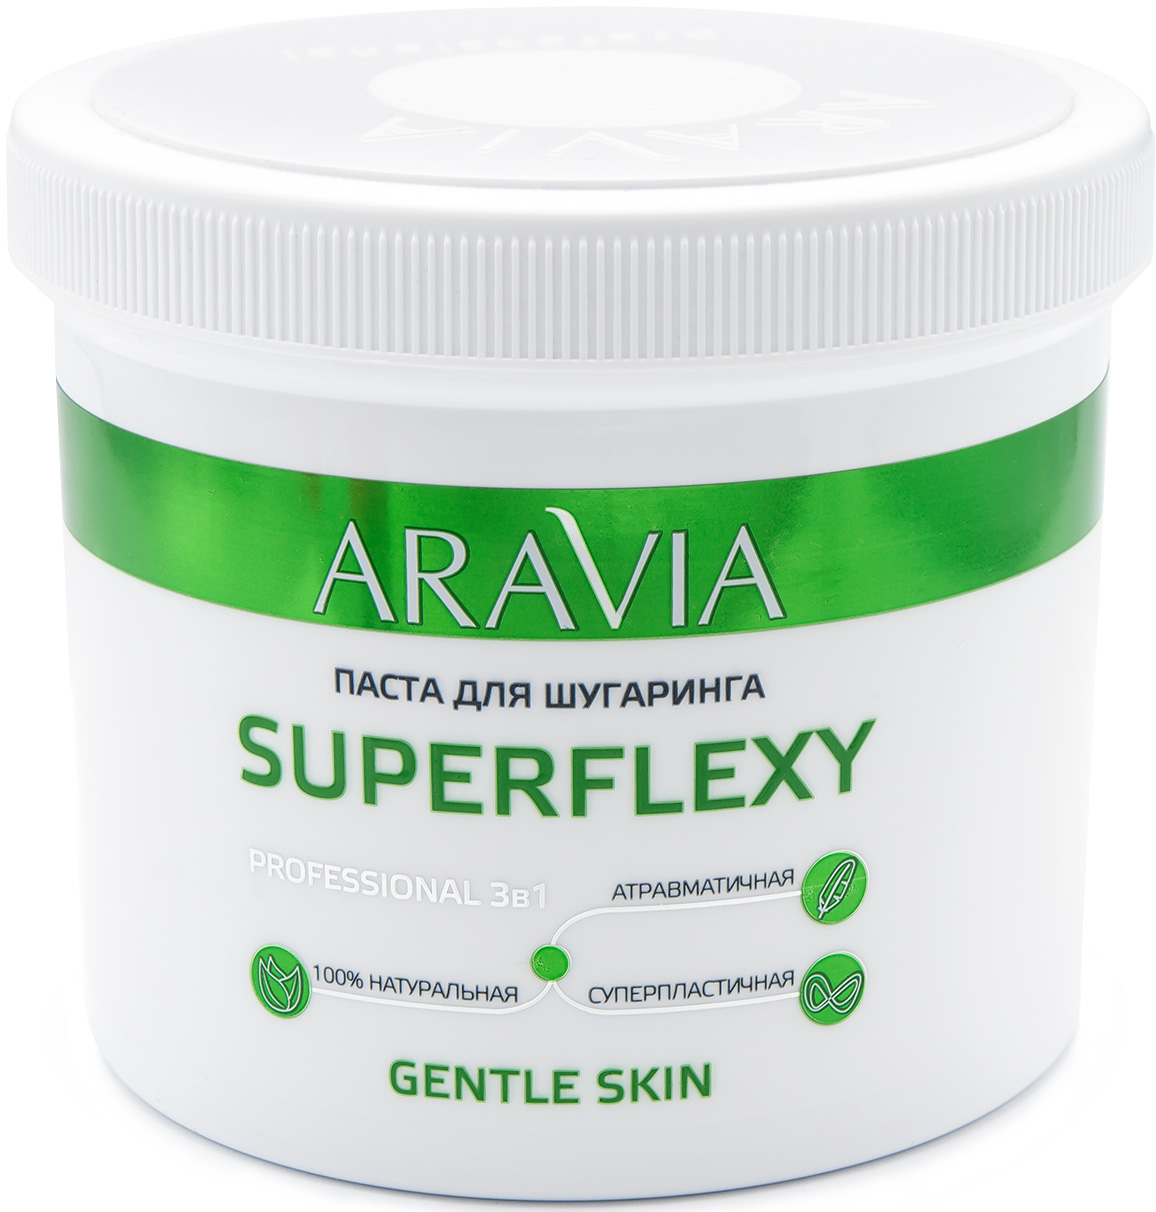 Aravia Professional Aravia Professional Паста для шугаринга Superflexy Gentle Skin, 750 г (Aravia Professional, Spa Депиляция)